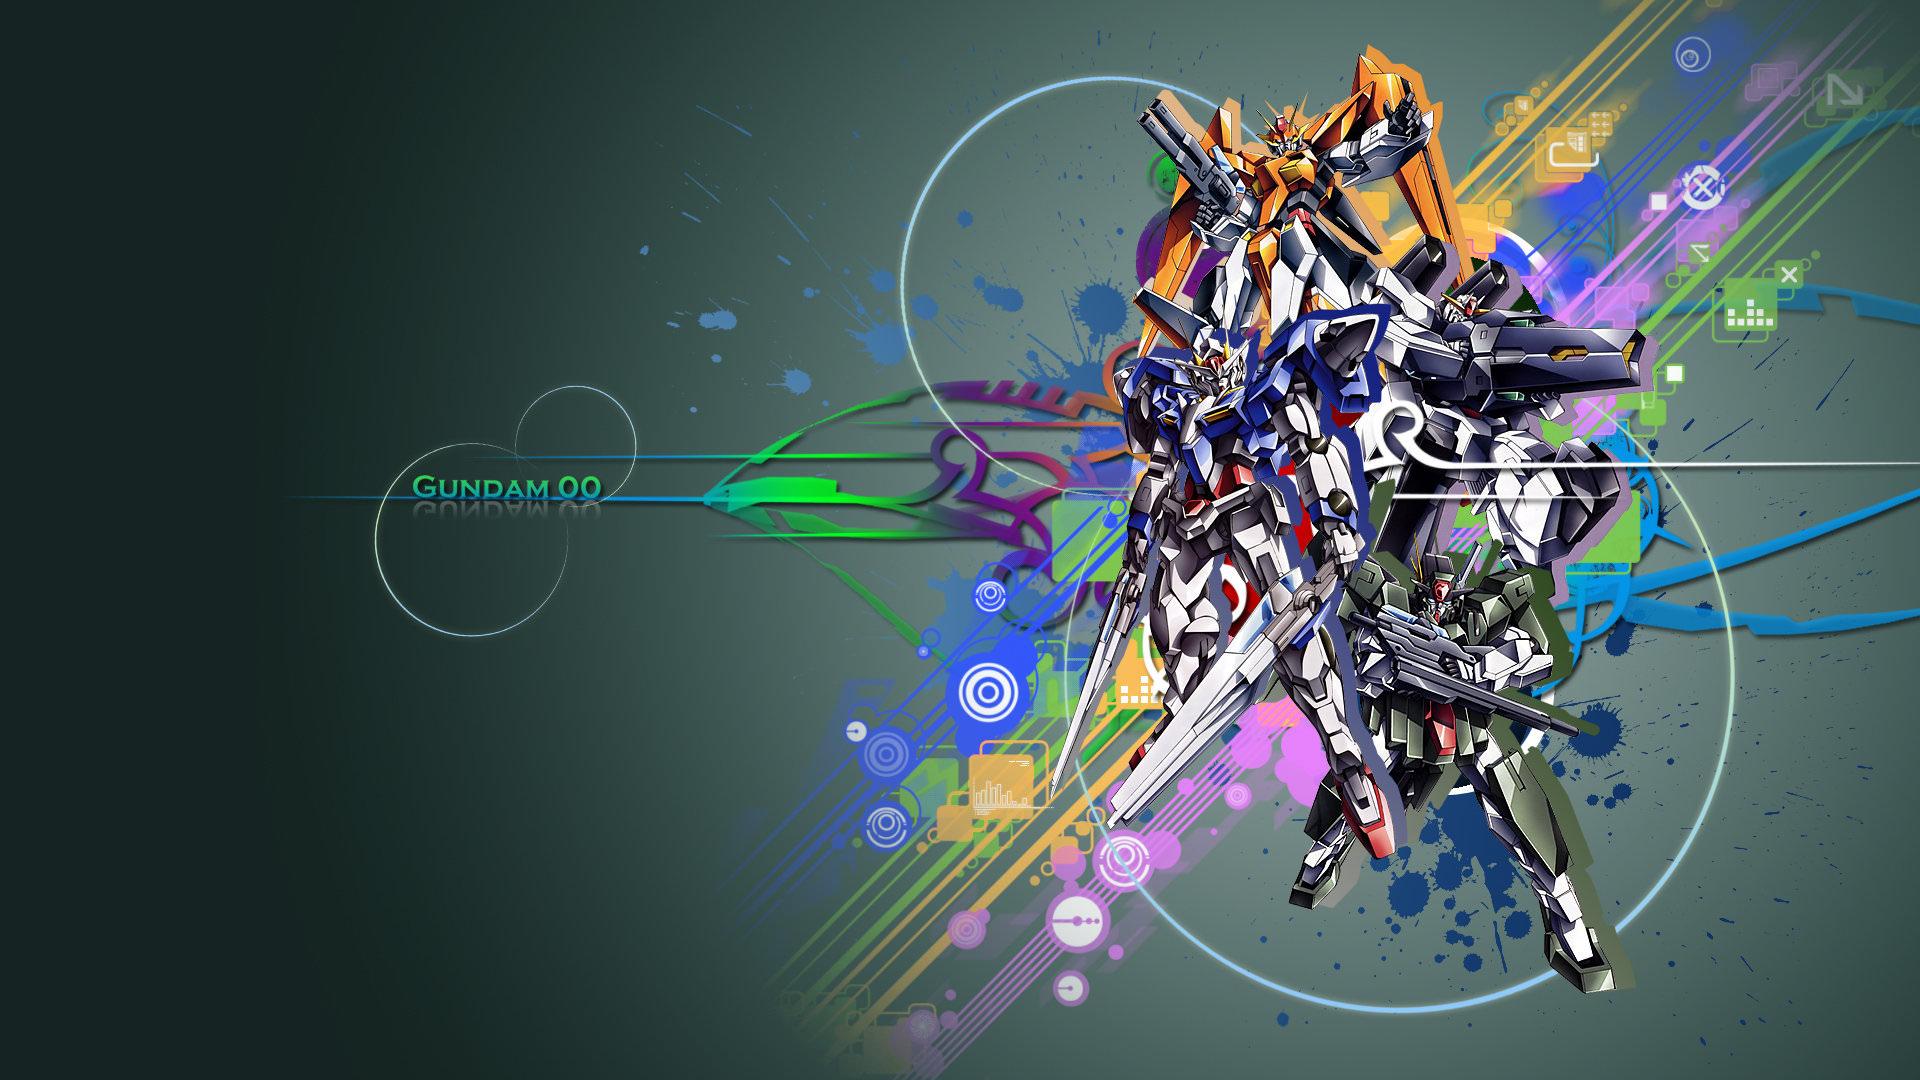 Gundam wallpaper 1920x1080 Full HD (1080p) desktop background